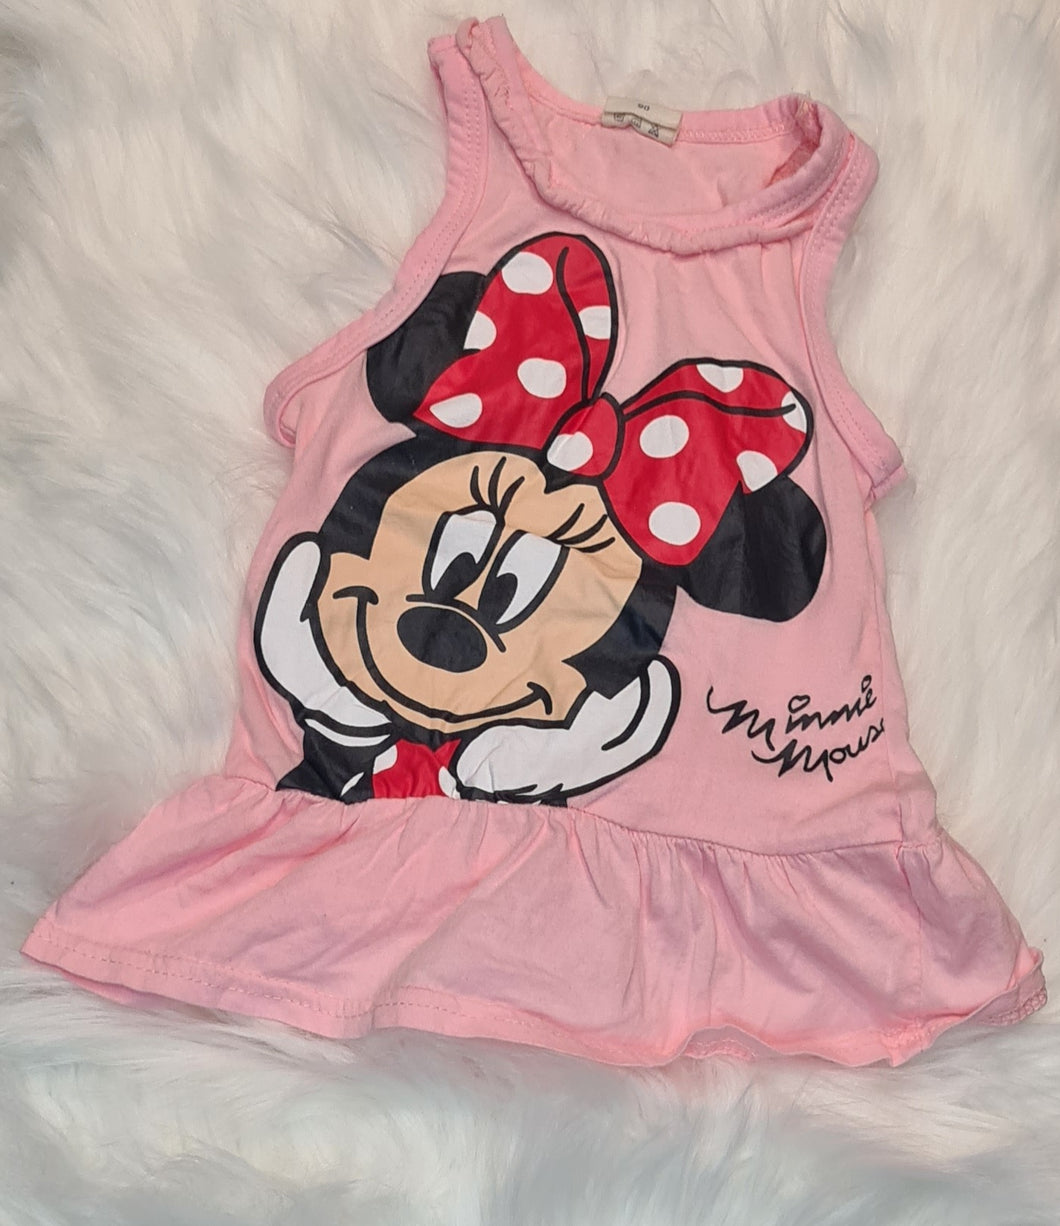 Girls 3-6 Months - Disney/Minnie Mouse Pink Top